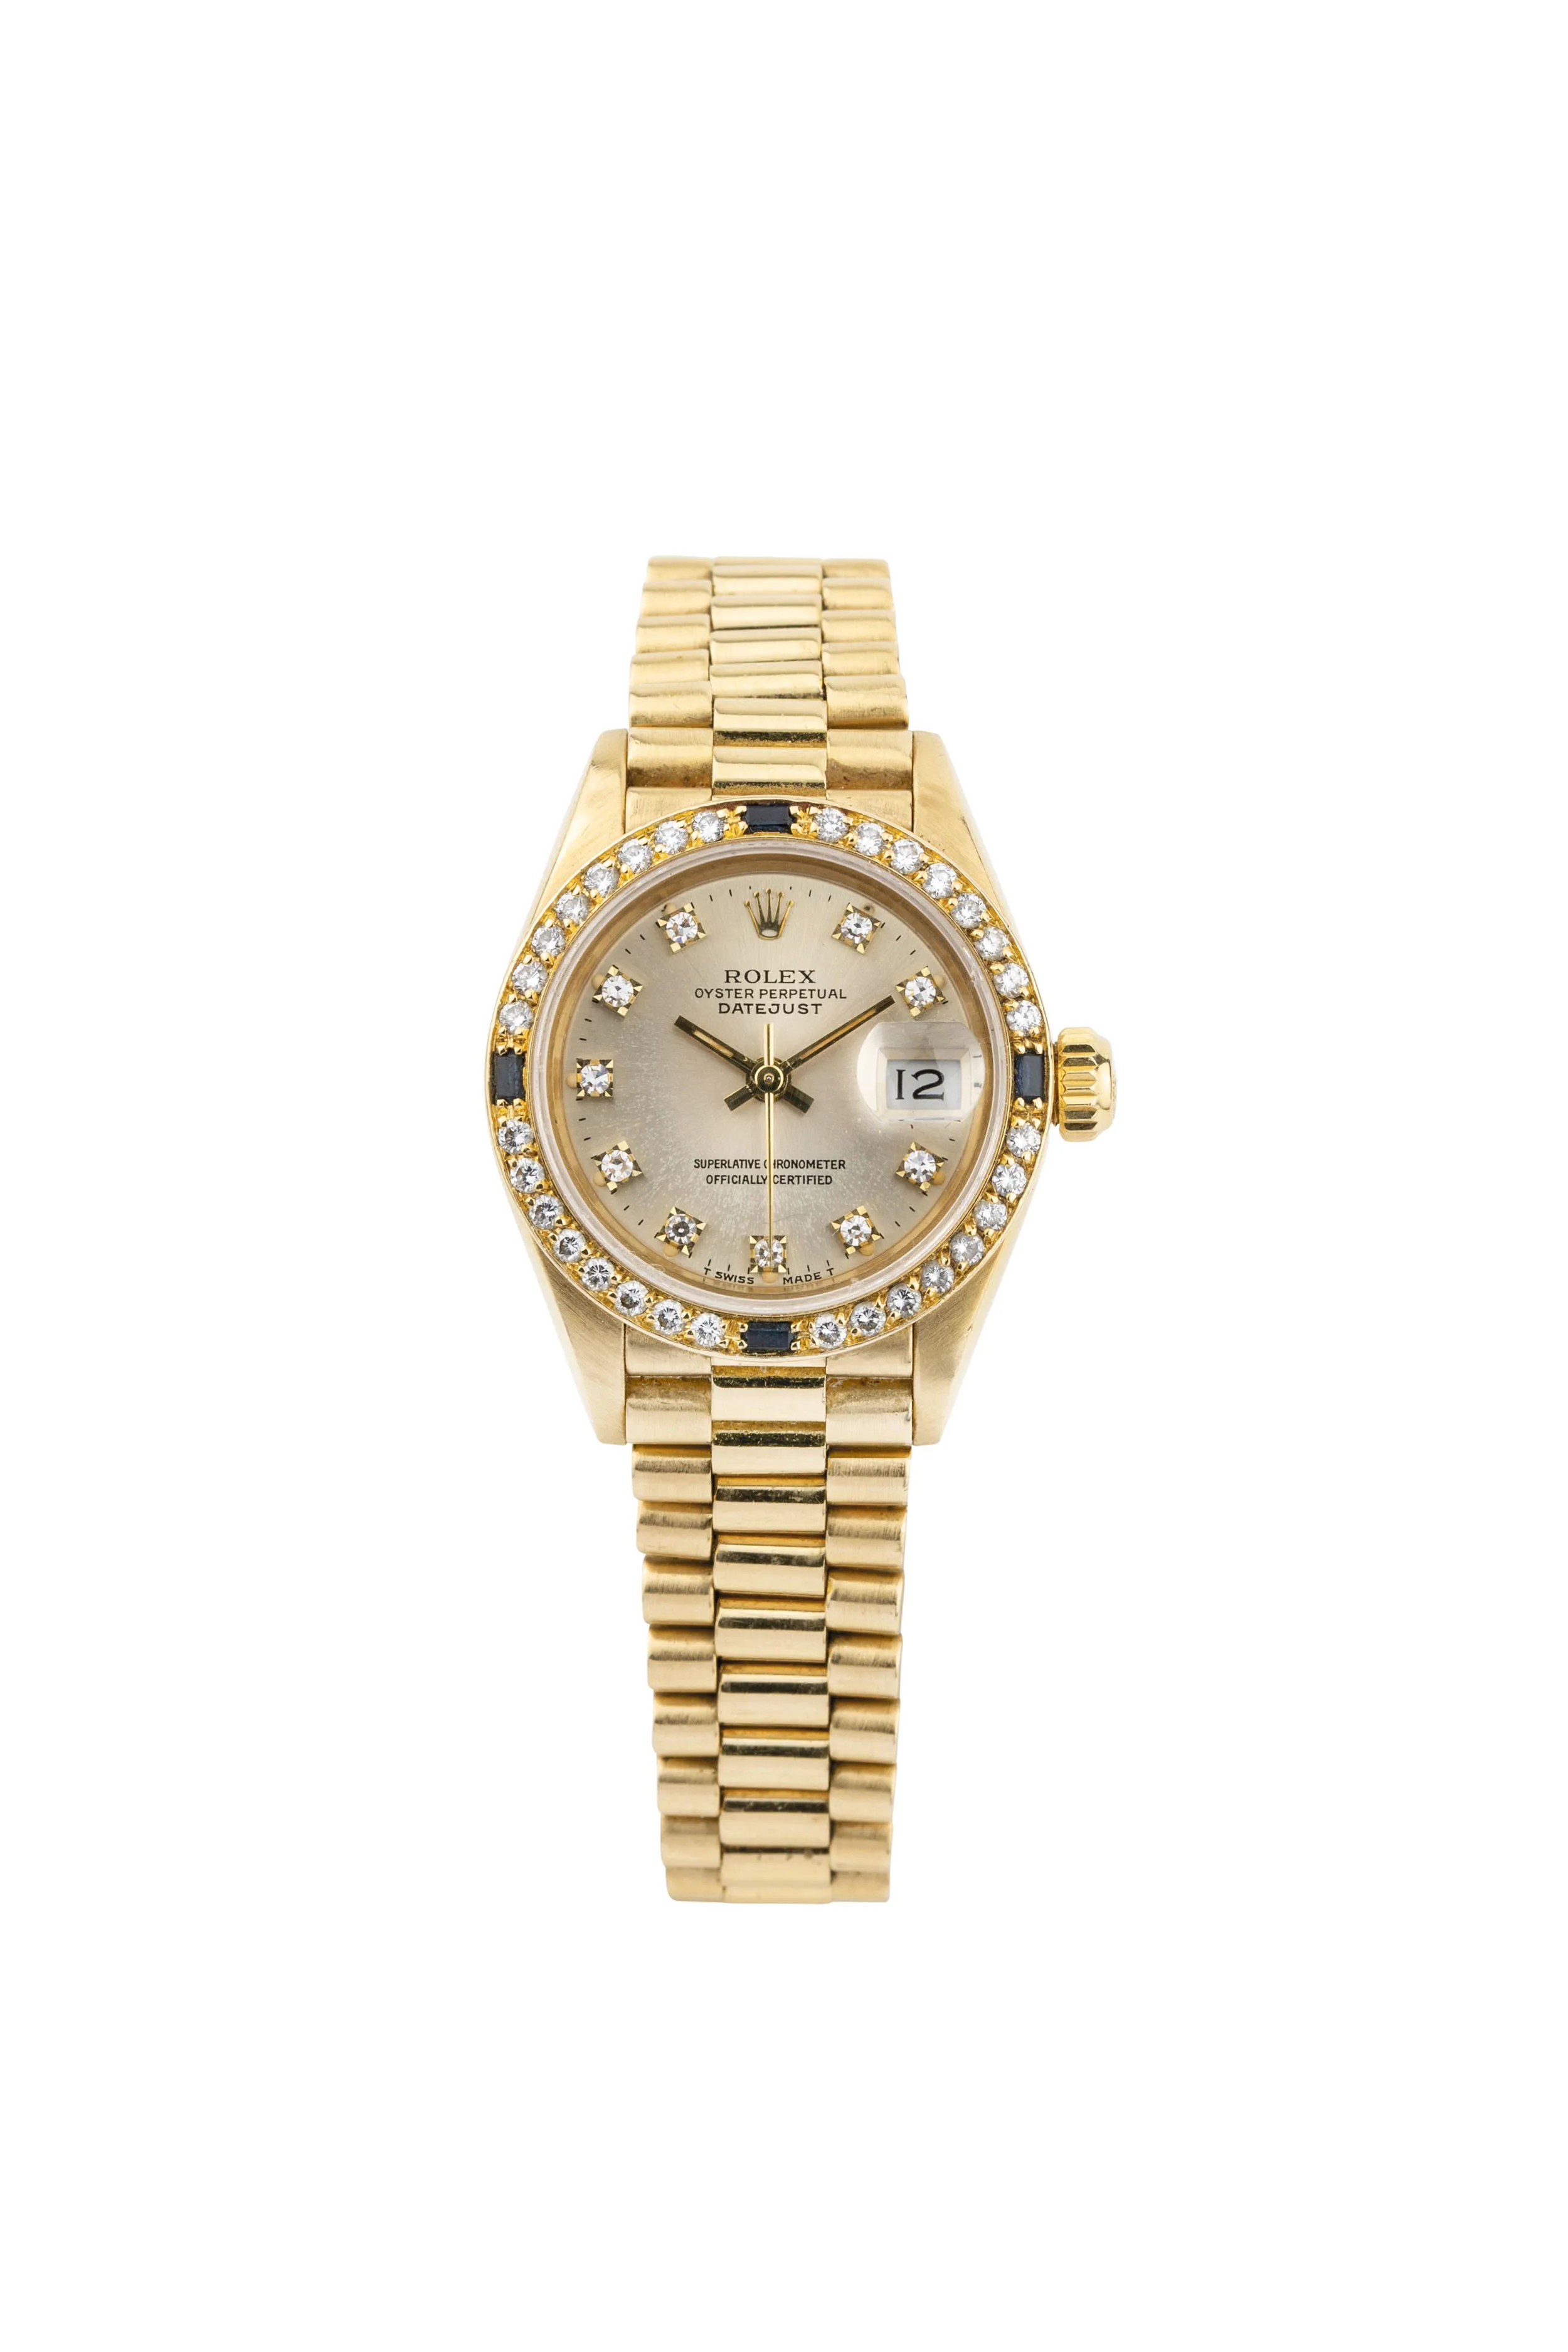 Rolex Lady-Datejust 69088 26mm Yellow gold and diamonds